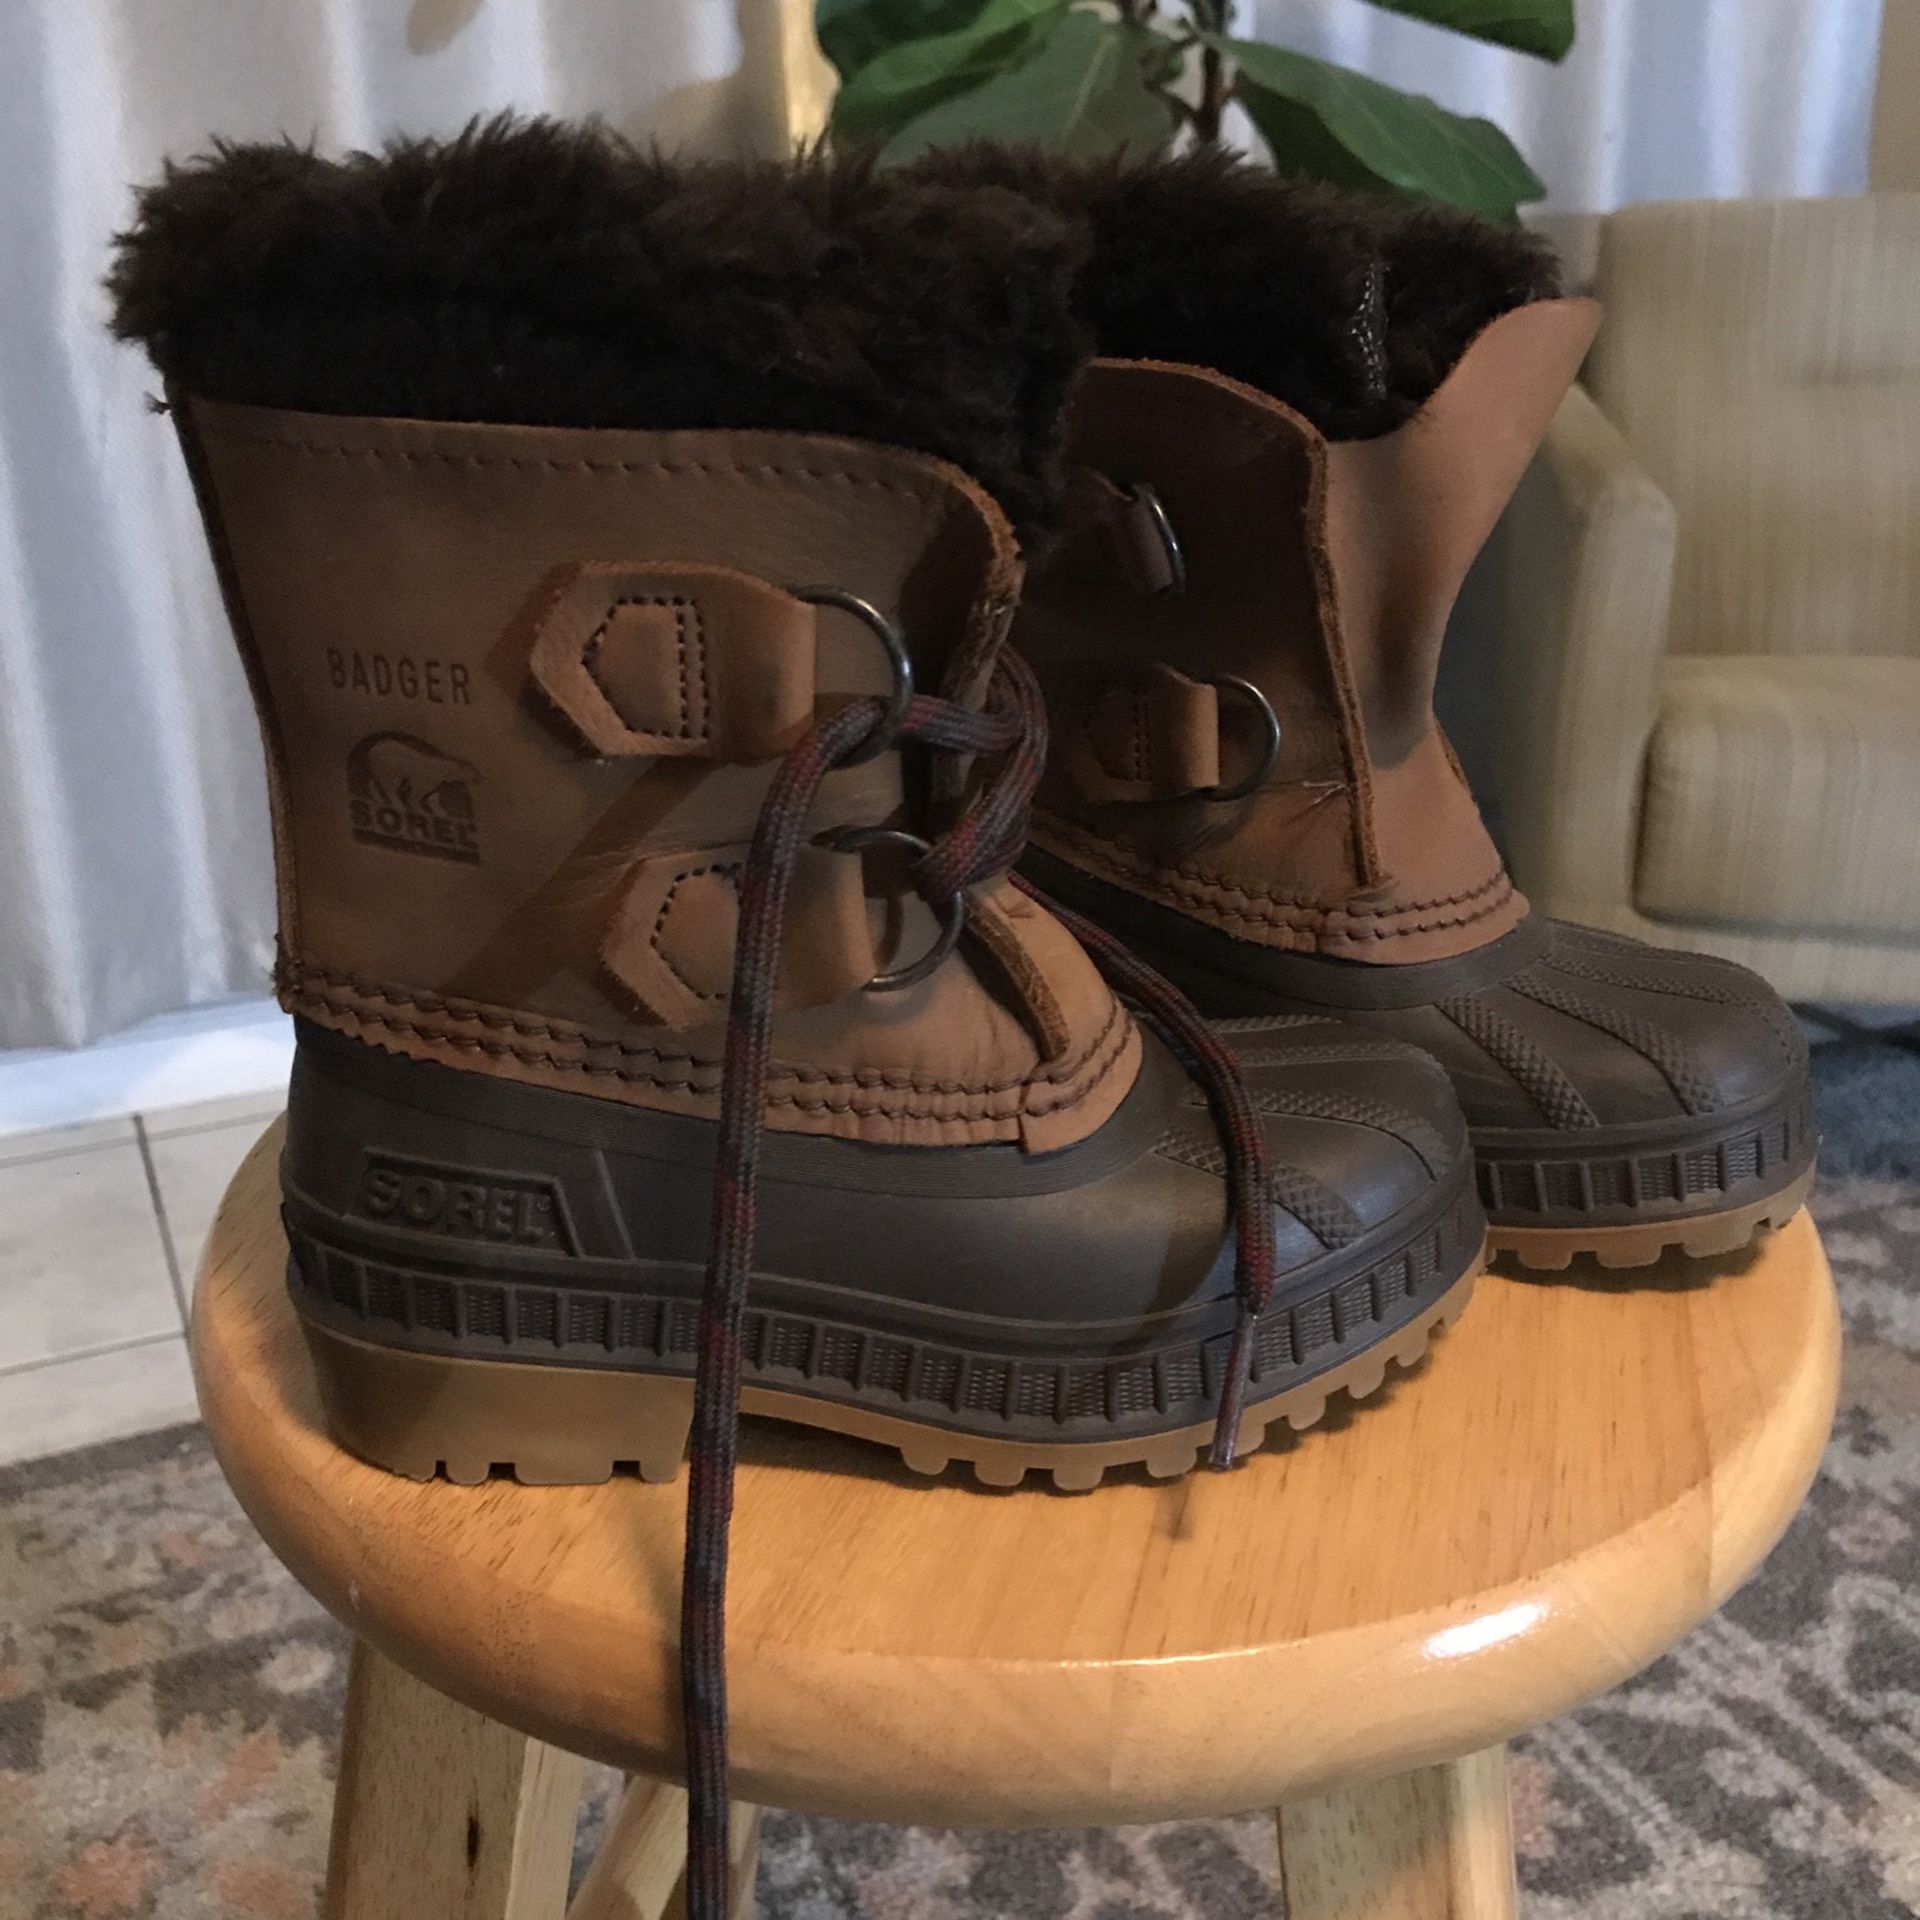 Sorel Badger Children’s Snow Boots Kids Size 9